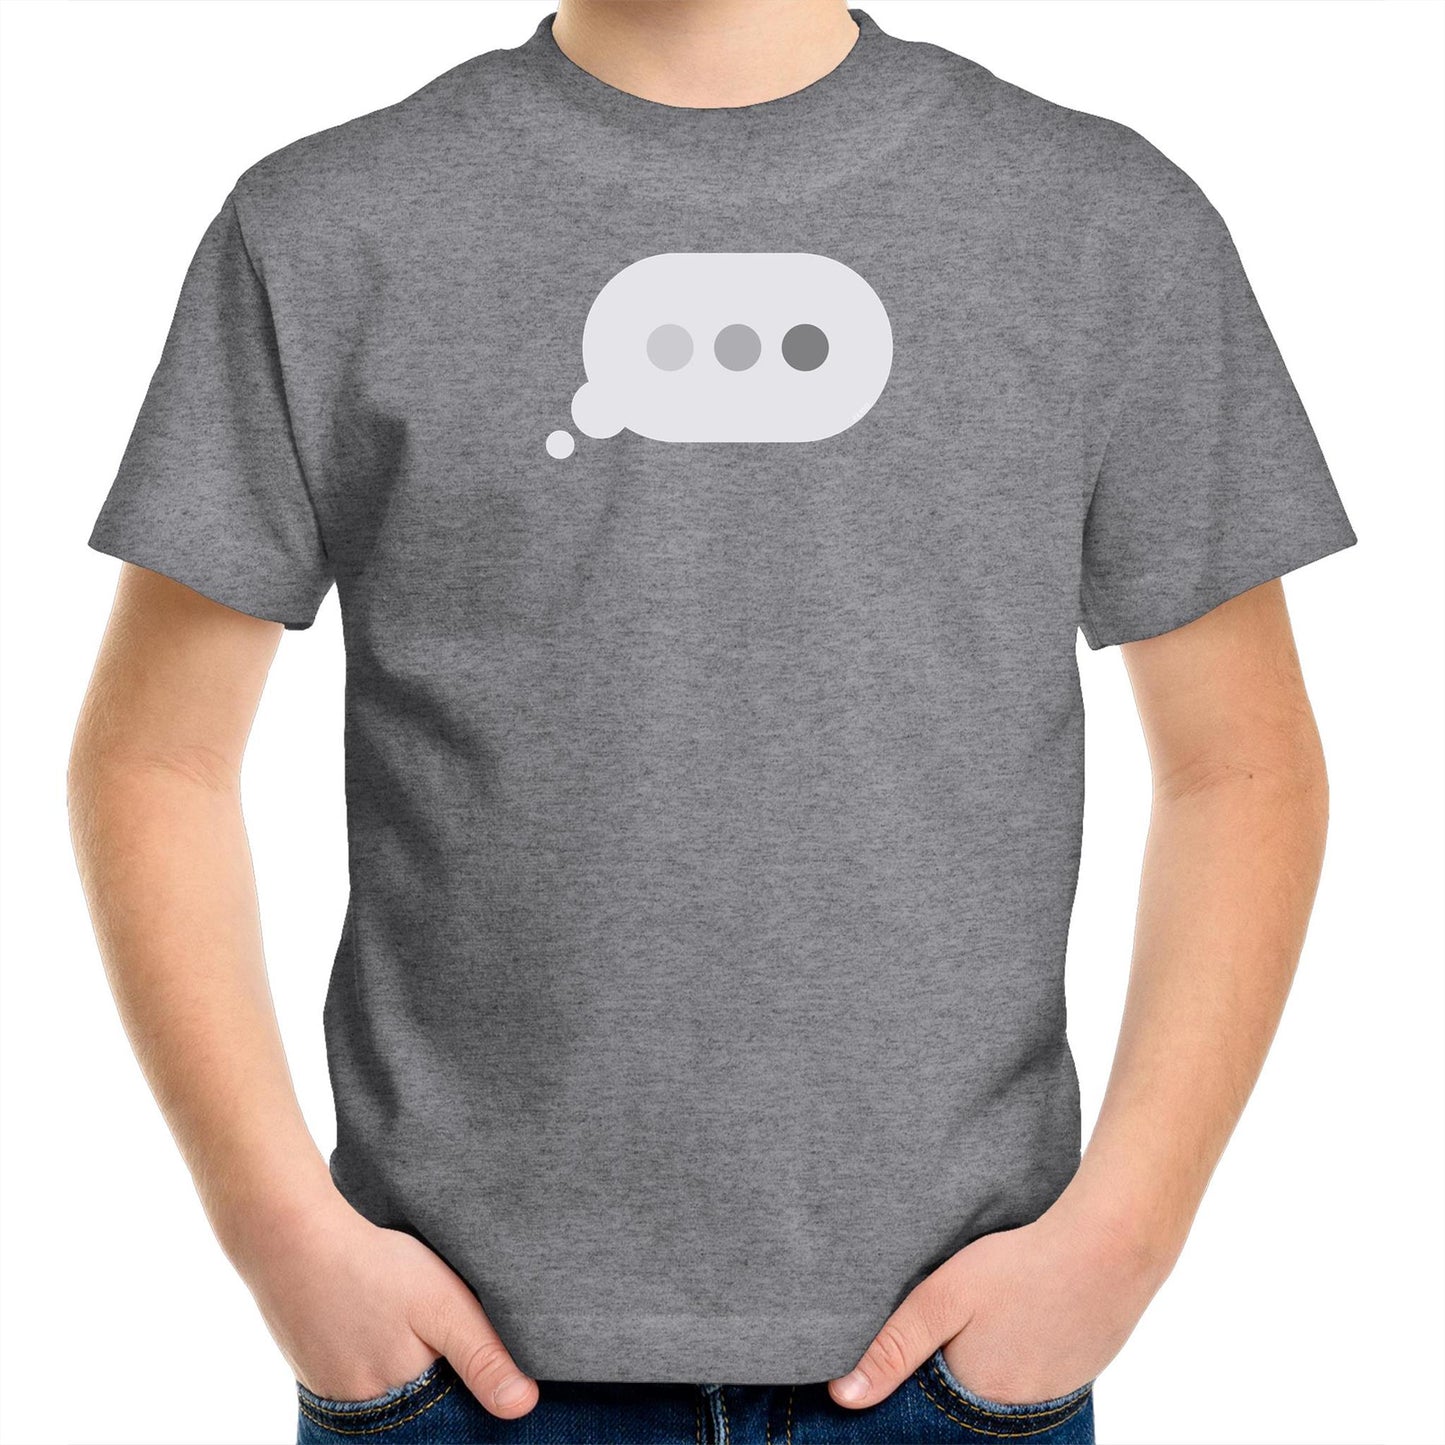 Typing Indicator T Shirts for Kids